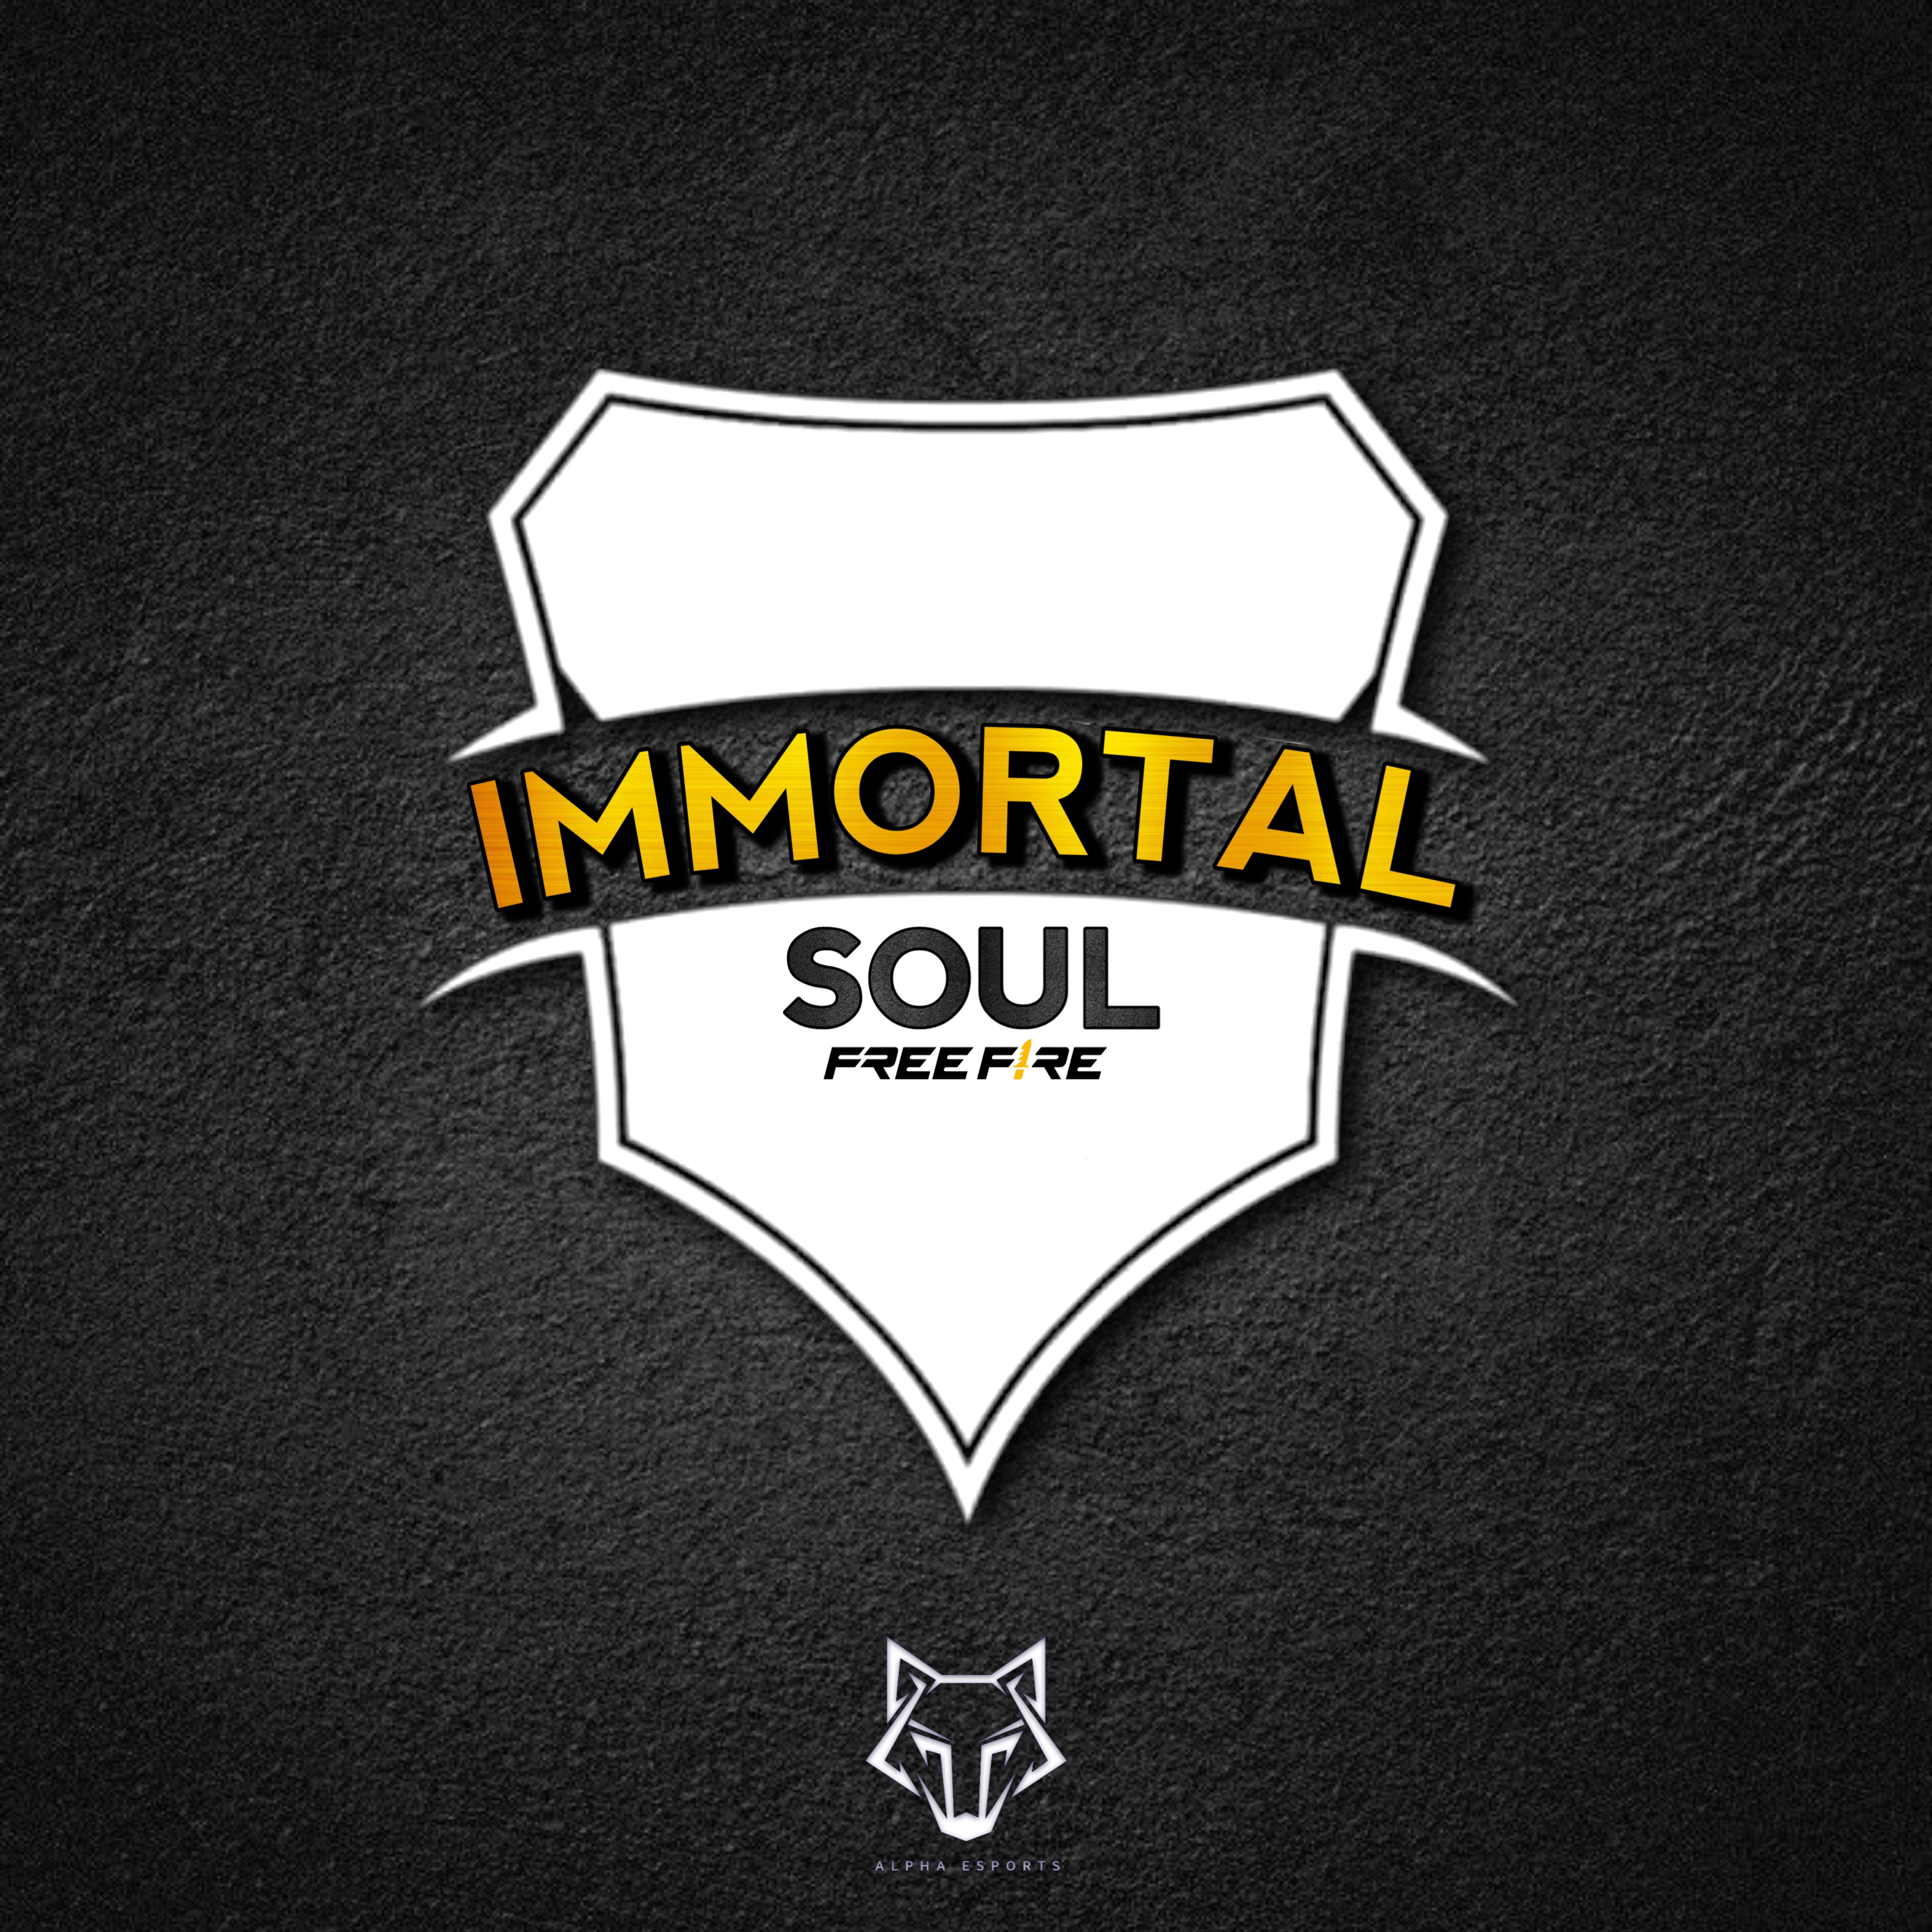 Immortal soul